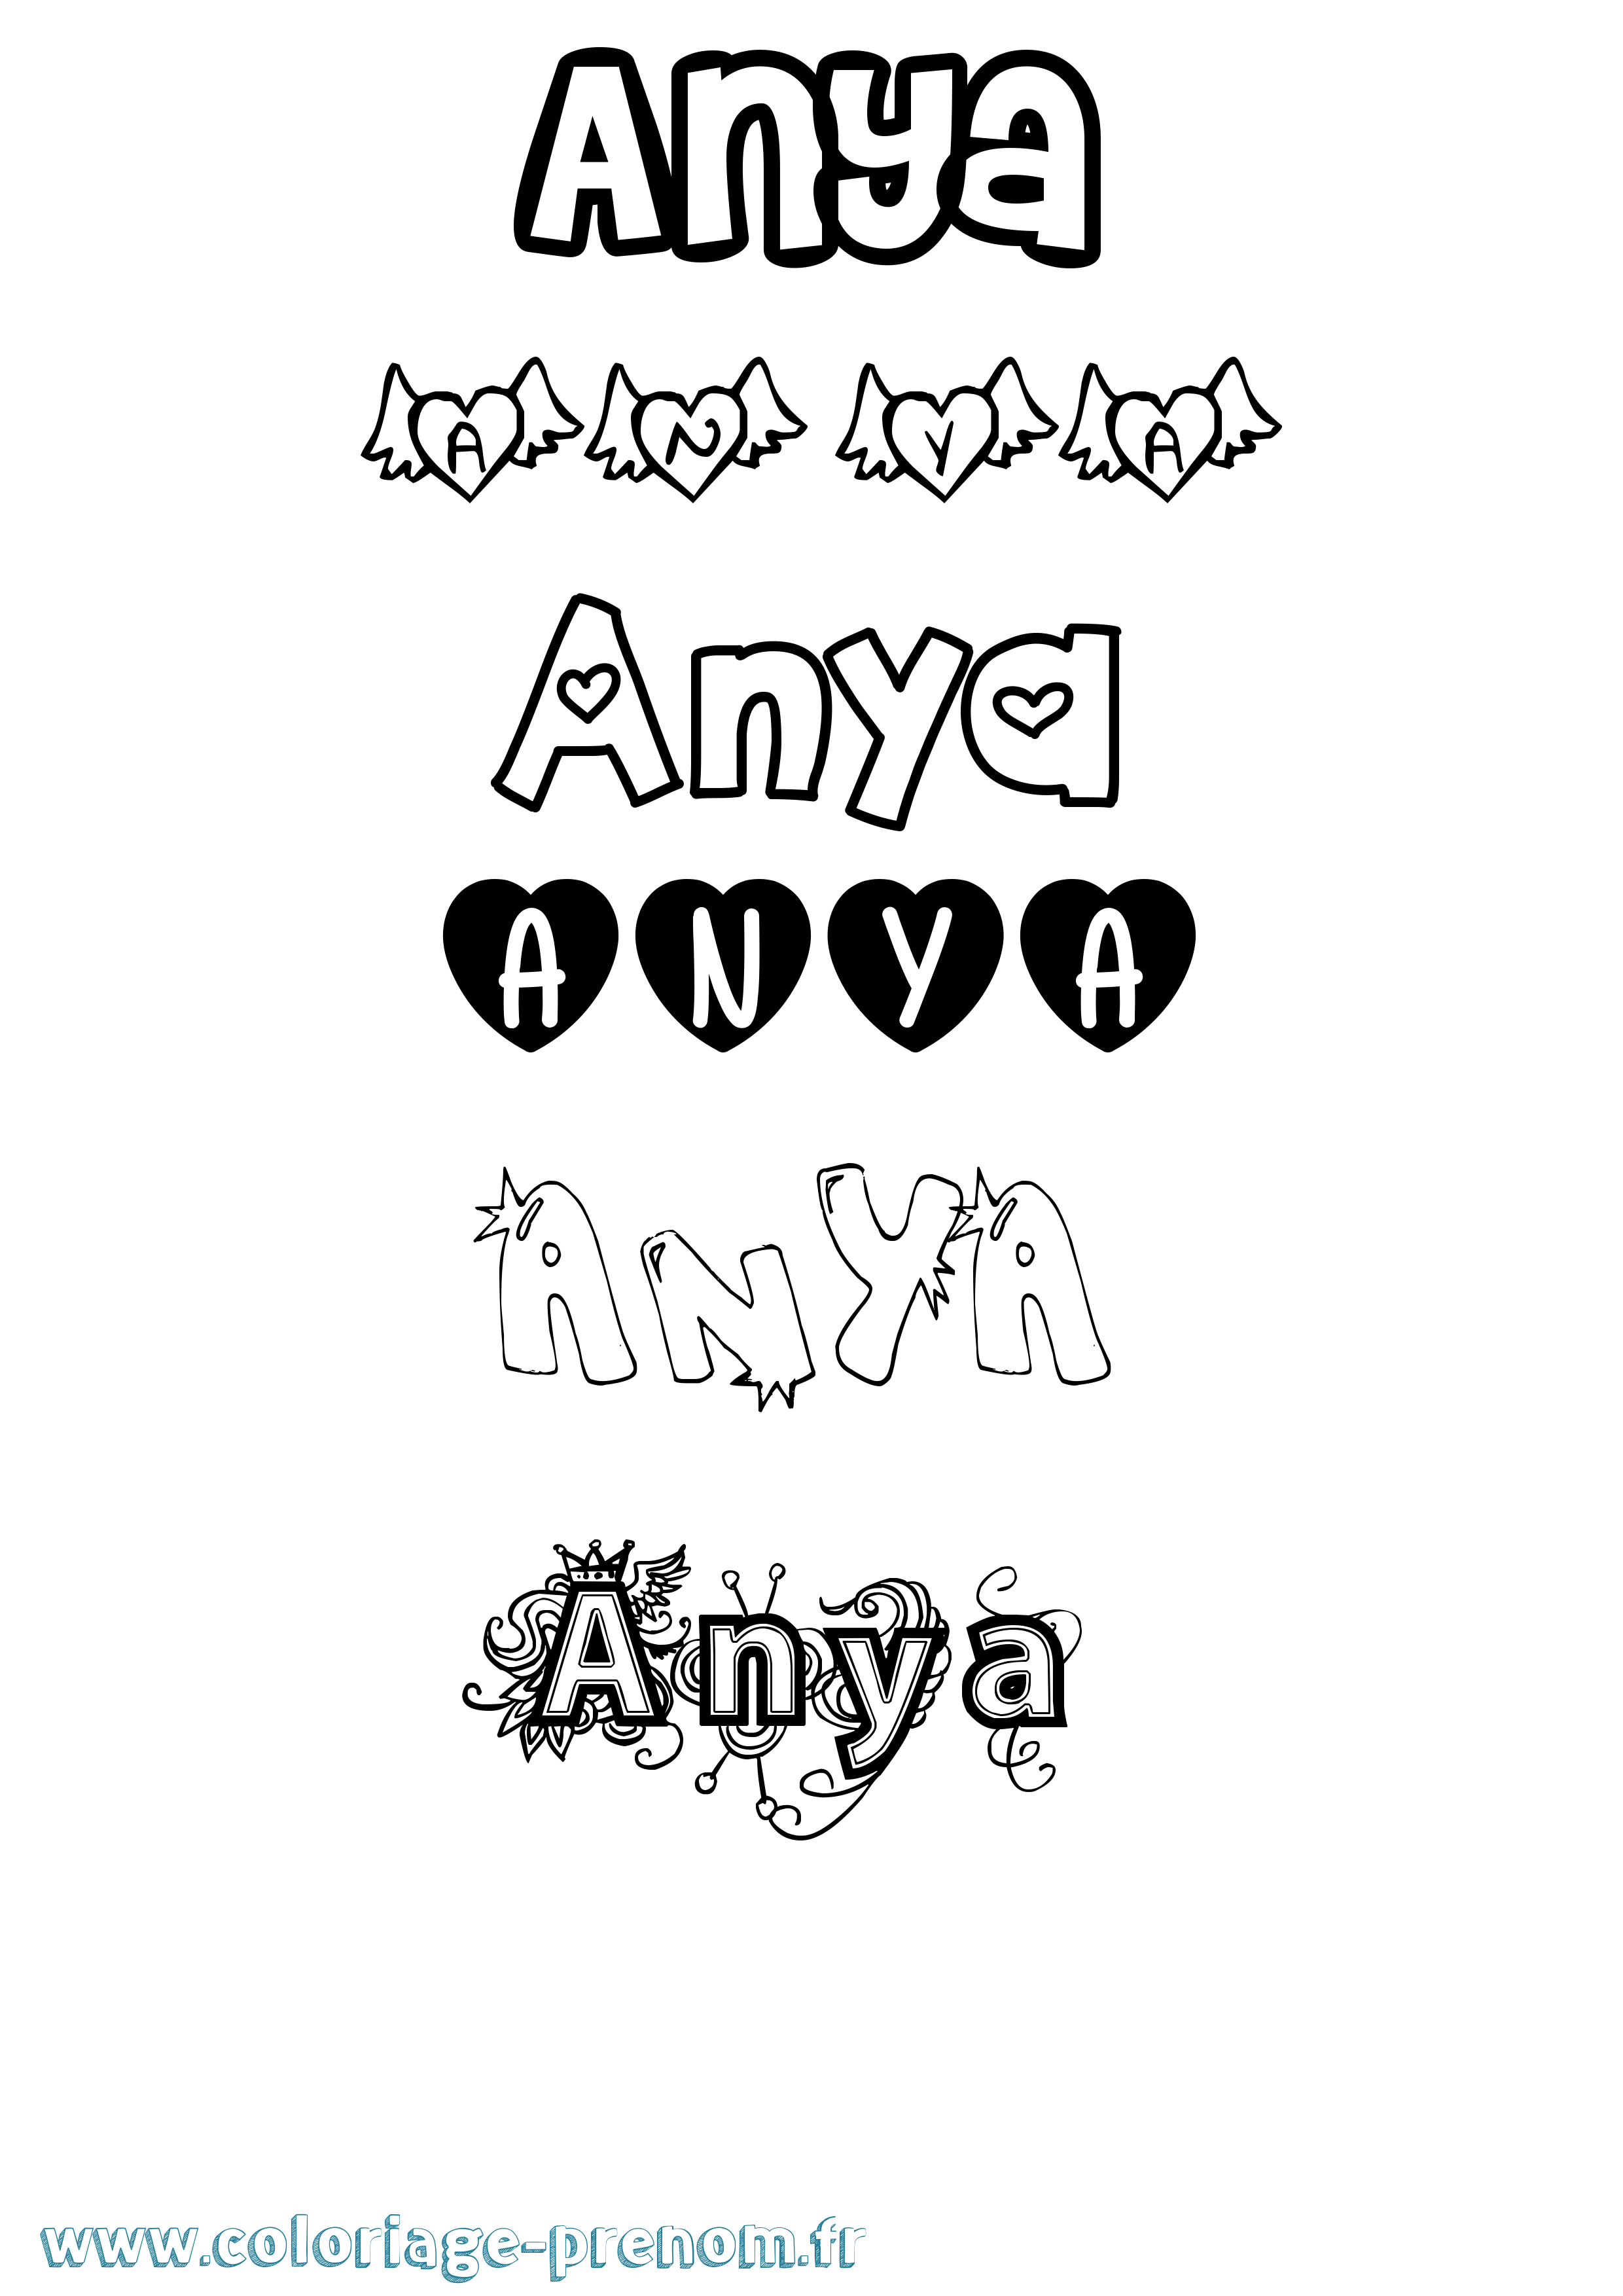 Coloriage prénom Anya